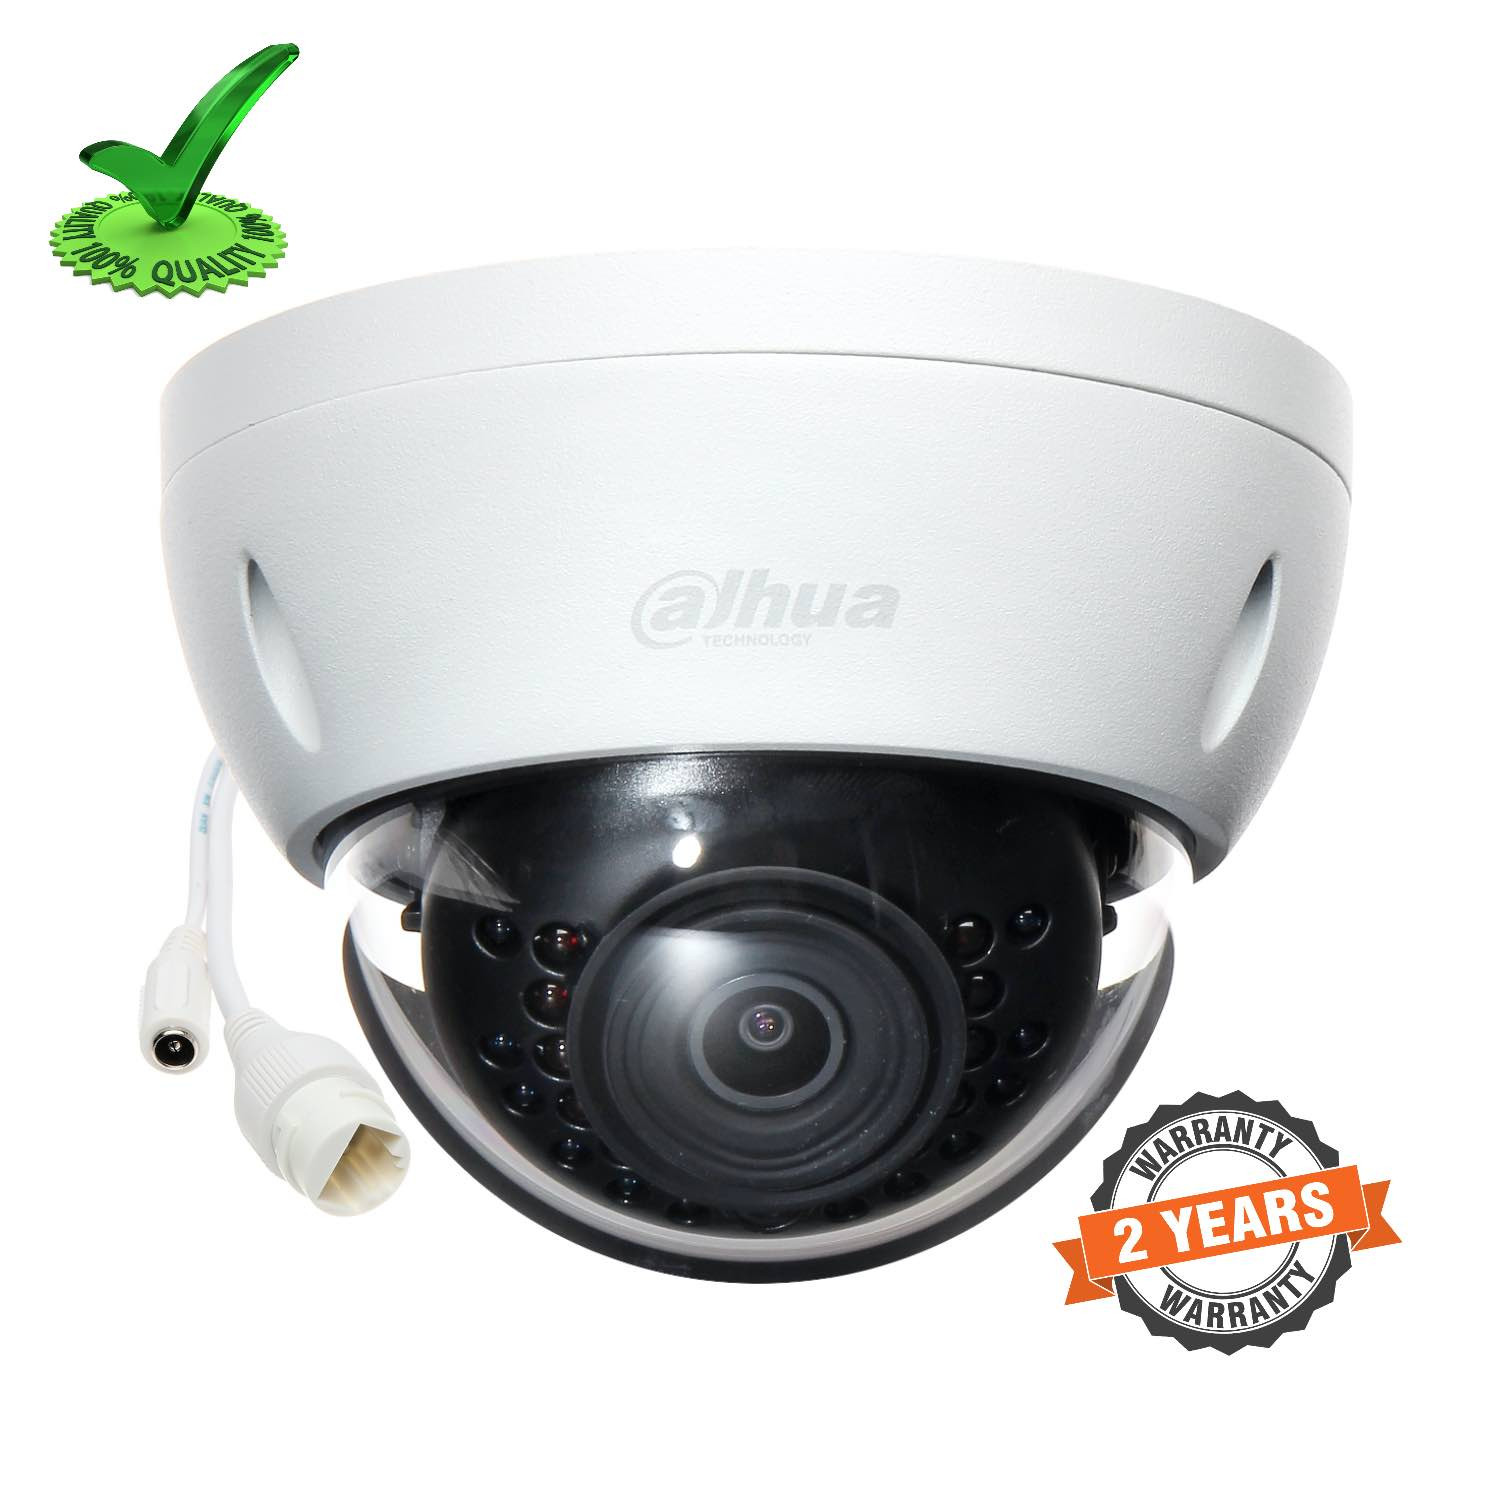 Dahua DH-IPC-HDBW14B0EP 4MP IR CCTV Dome Network IP Camera